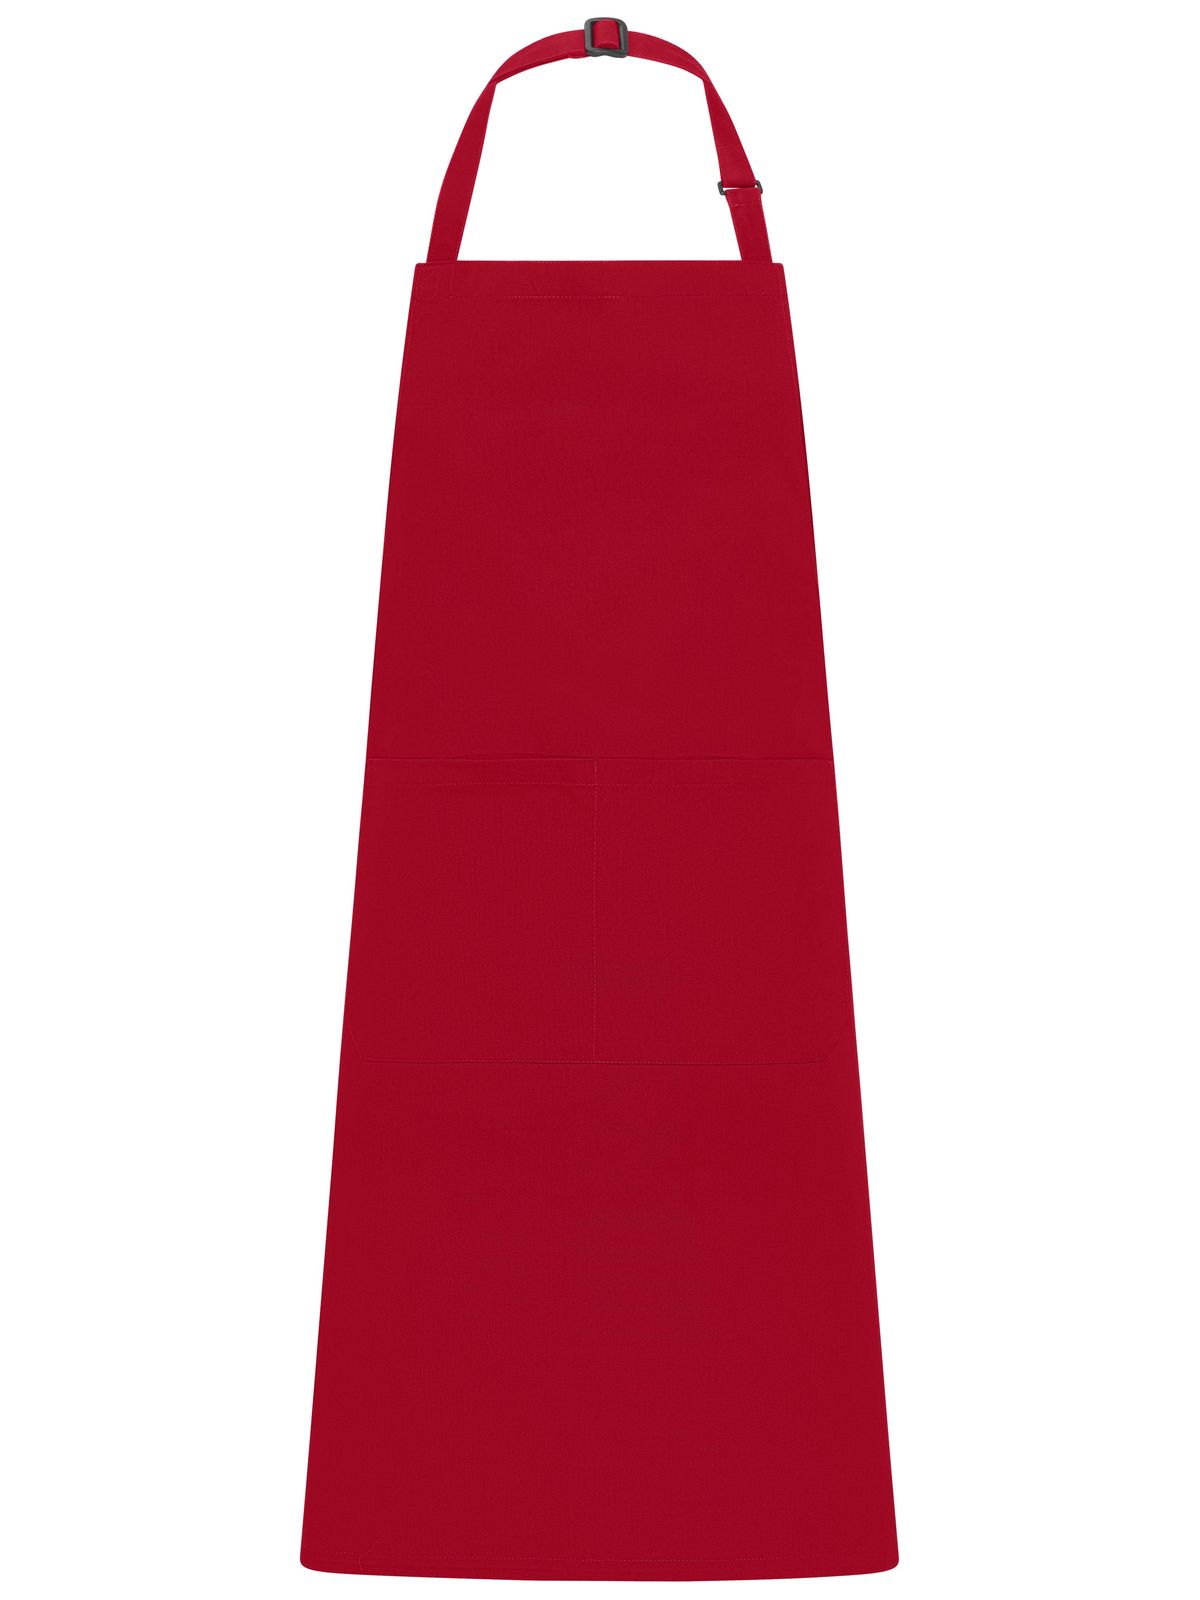 apron-with-bib-red.webp